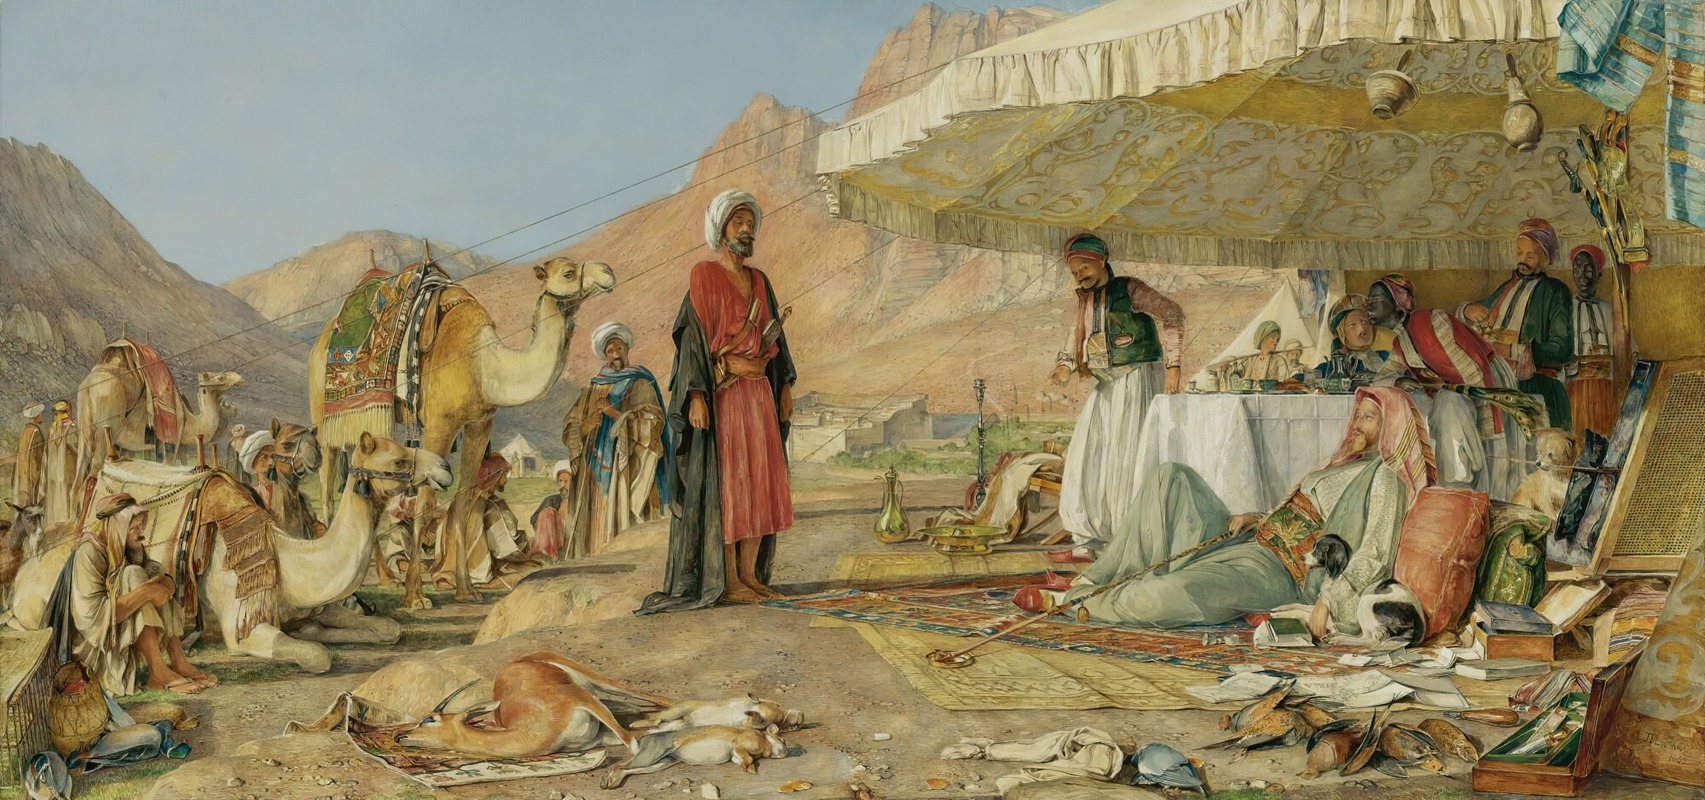 John Frederick Lewis - A Frank Encampment In The Desert Of Mount Sinai, 1842